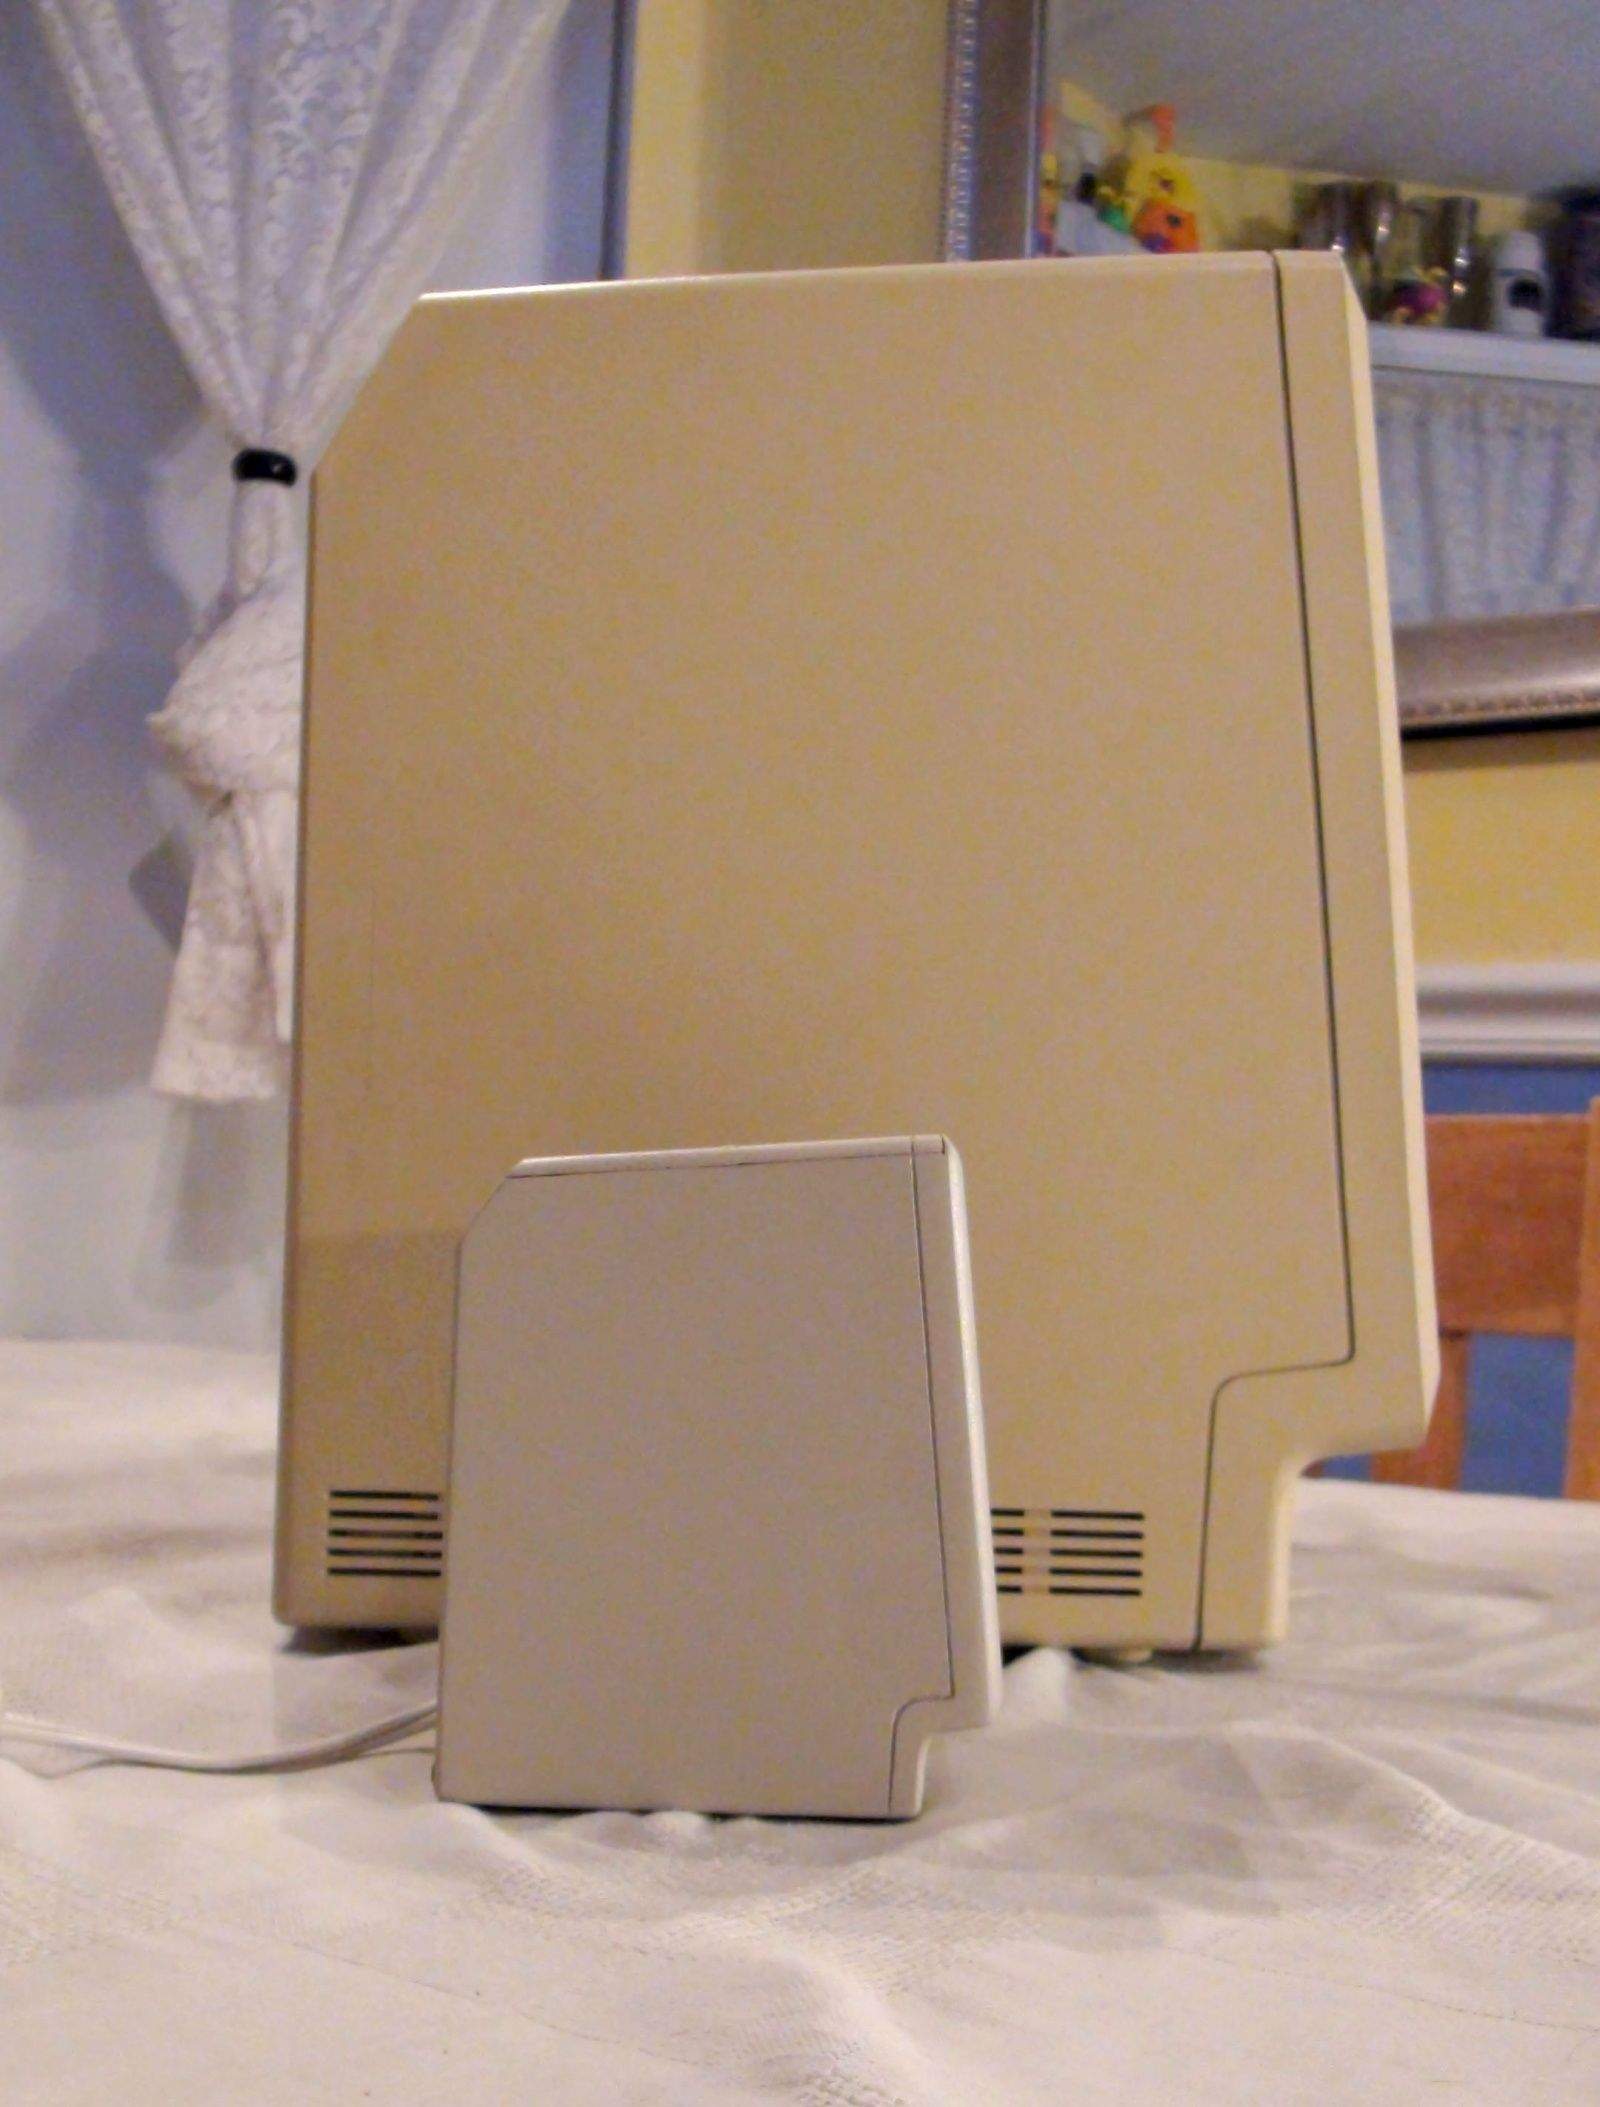 Profile View of Mini Mac